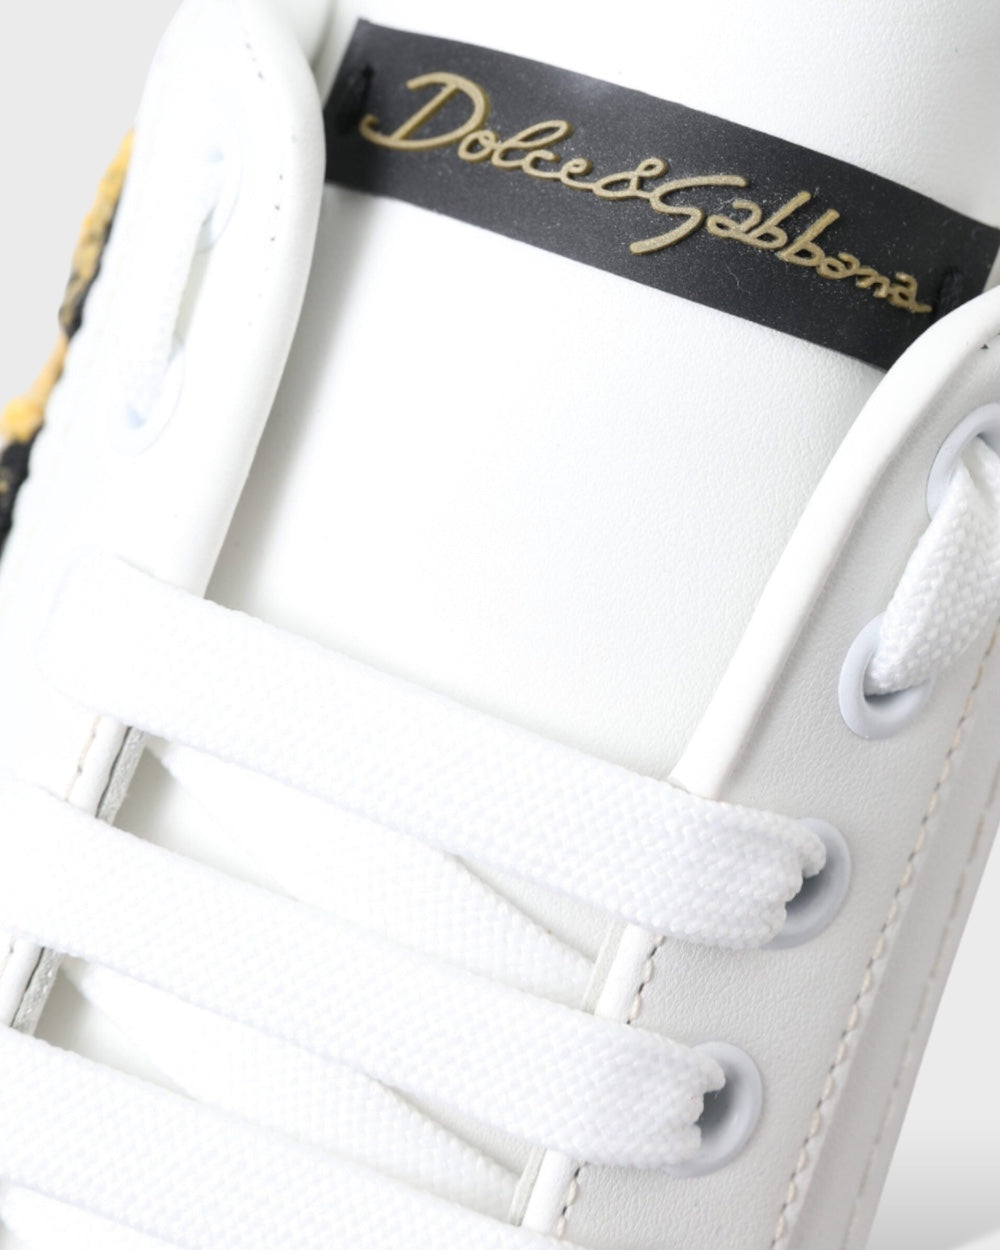 Dolce & Gabbana White Crown Portofino Leather Sneakers Shoes